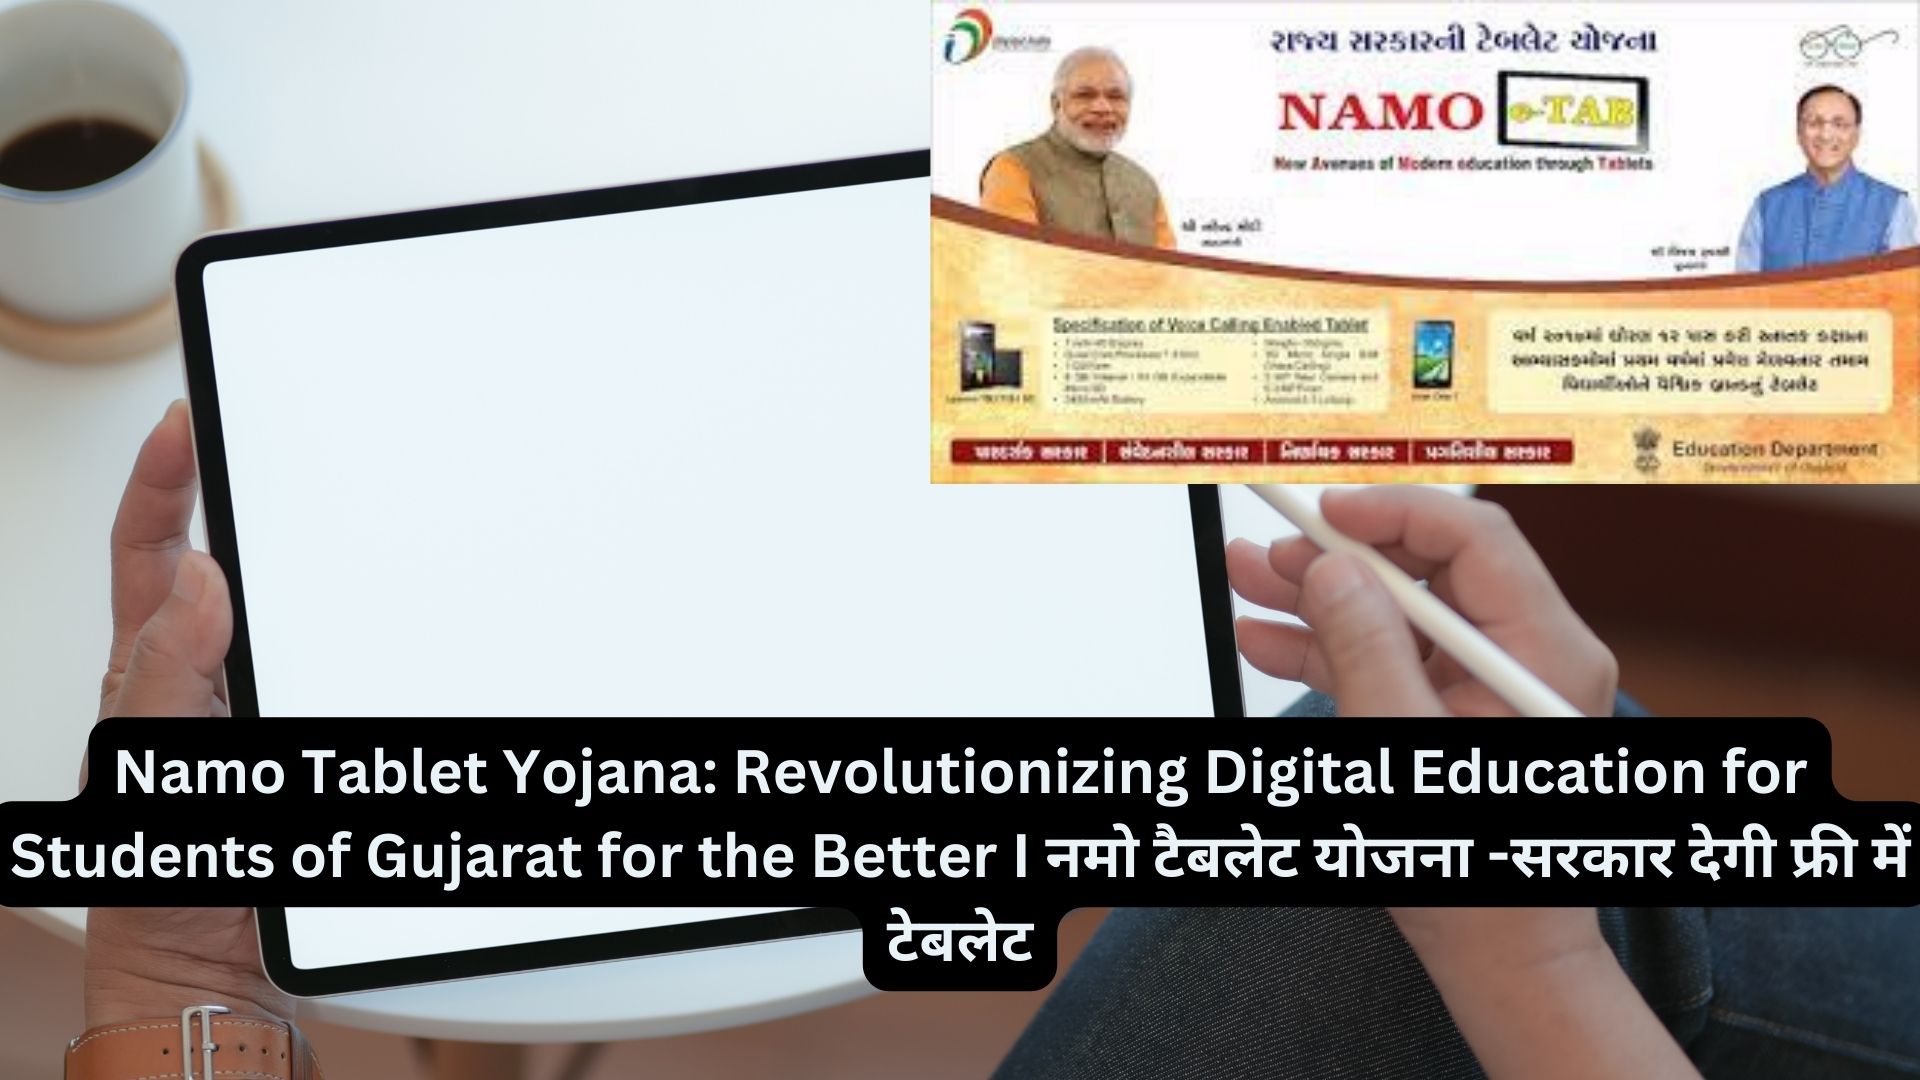 Namo Tablet Yojana: Revolutionizing Digital Education for Students of Gujarat for the Better I नमो टैबलेट योजना -सरकार देगी फ्री में टेबलेट